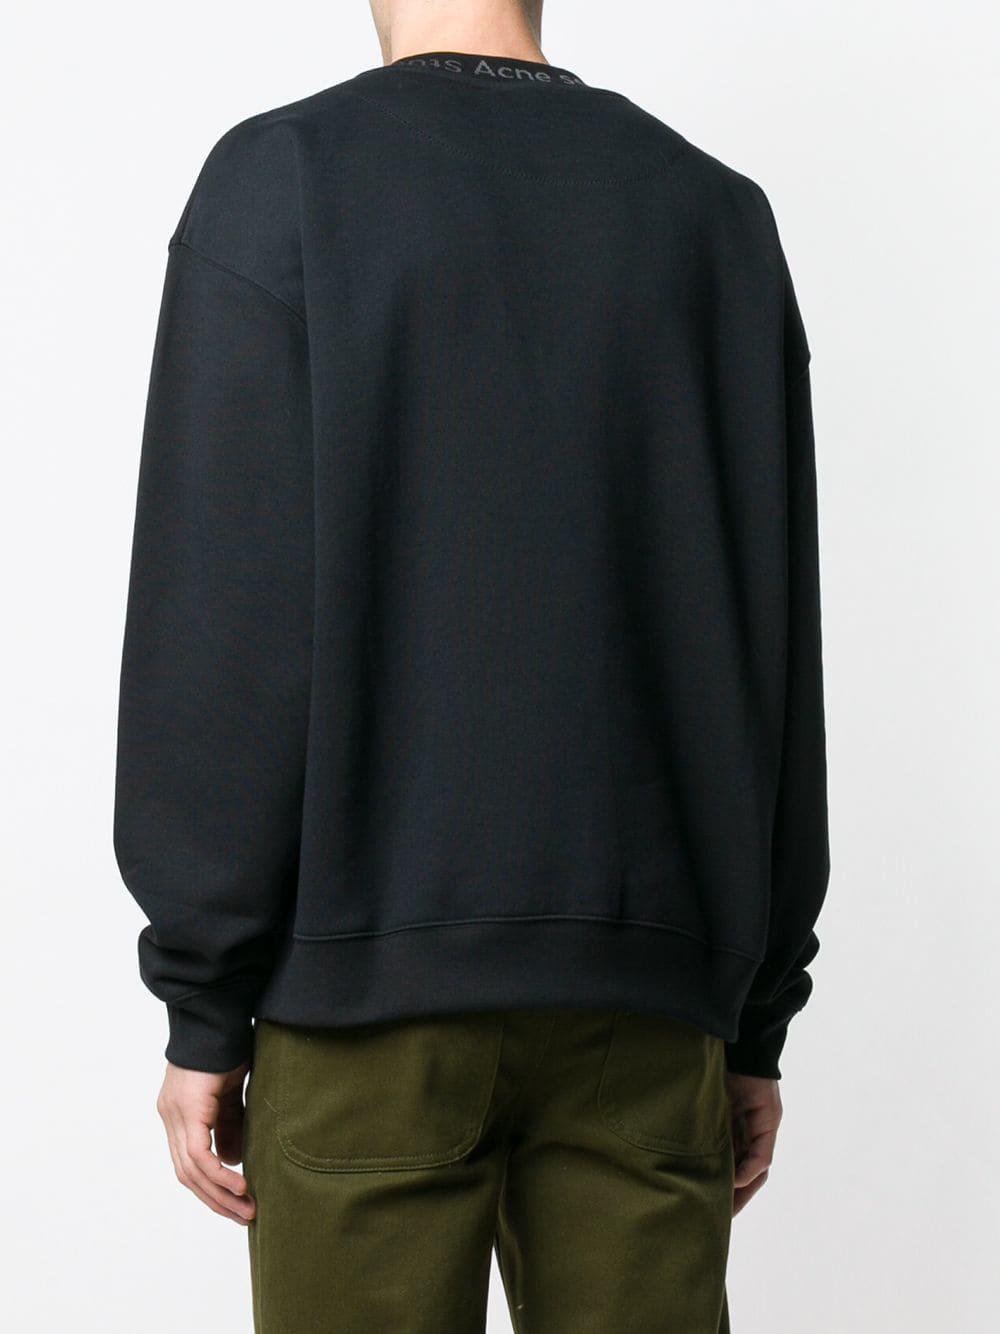 Acne Studios Flogho Iconic Sweatshirt in Black for Men - Lyst